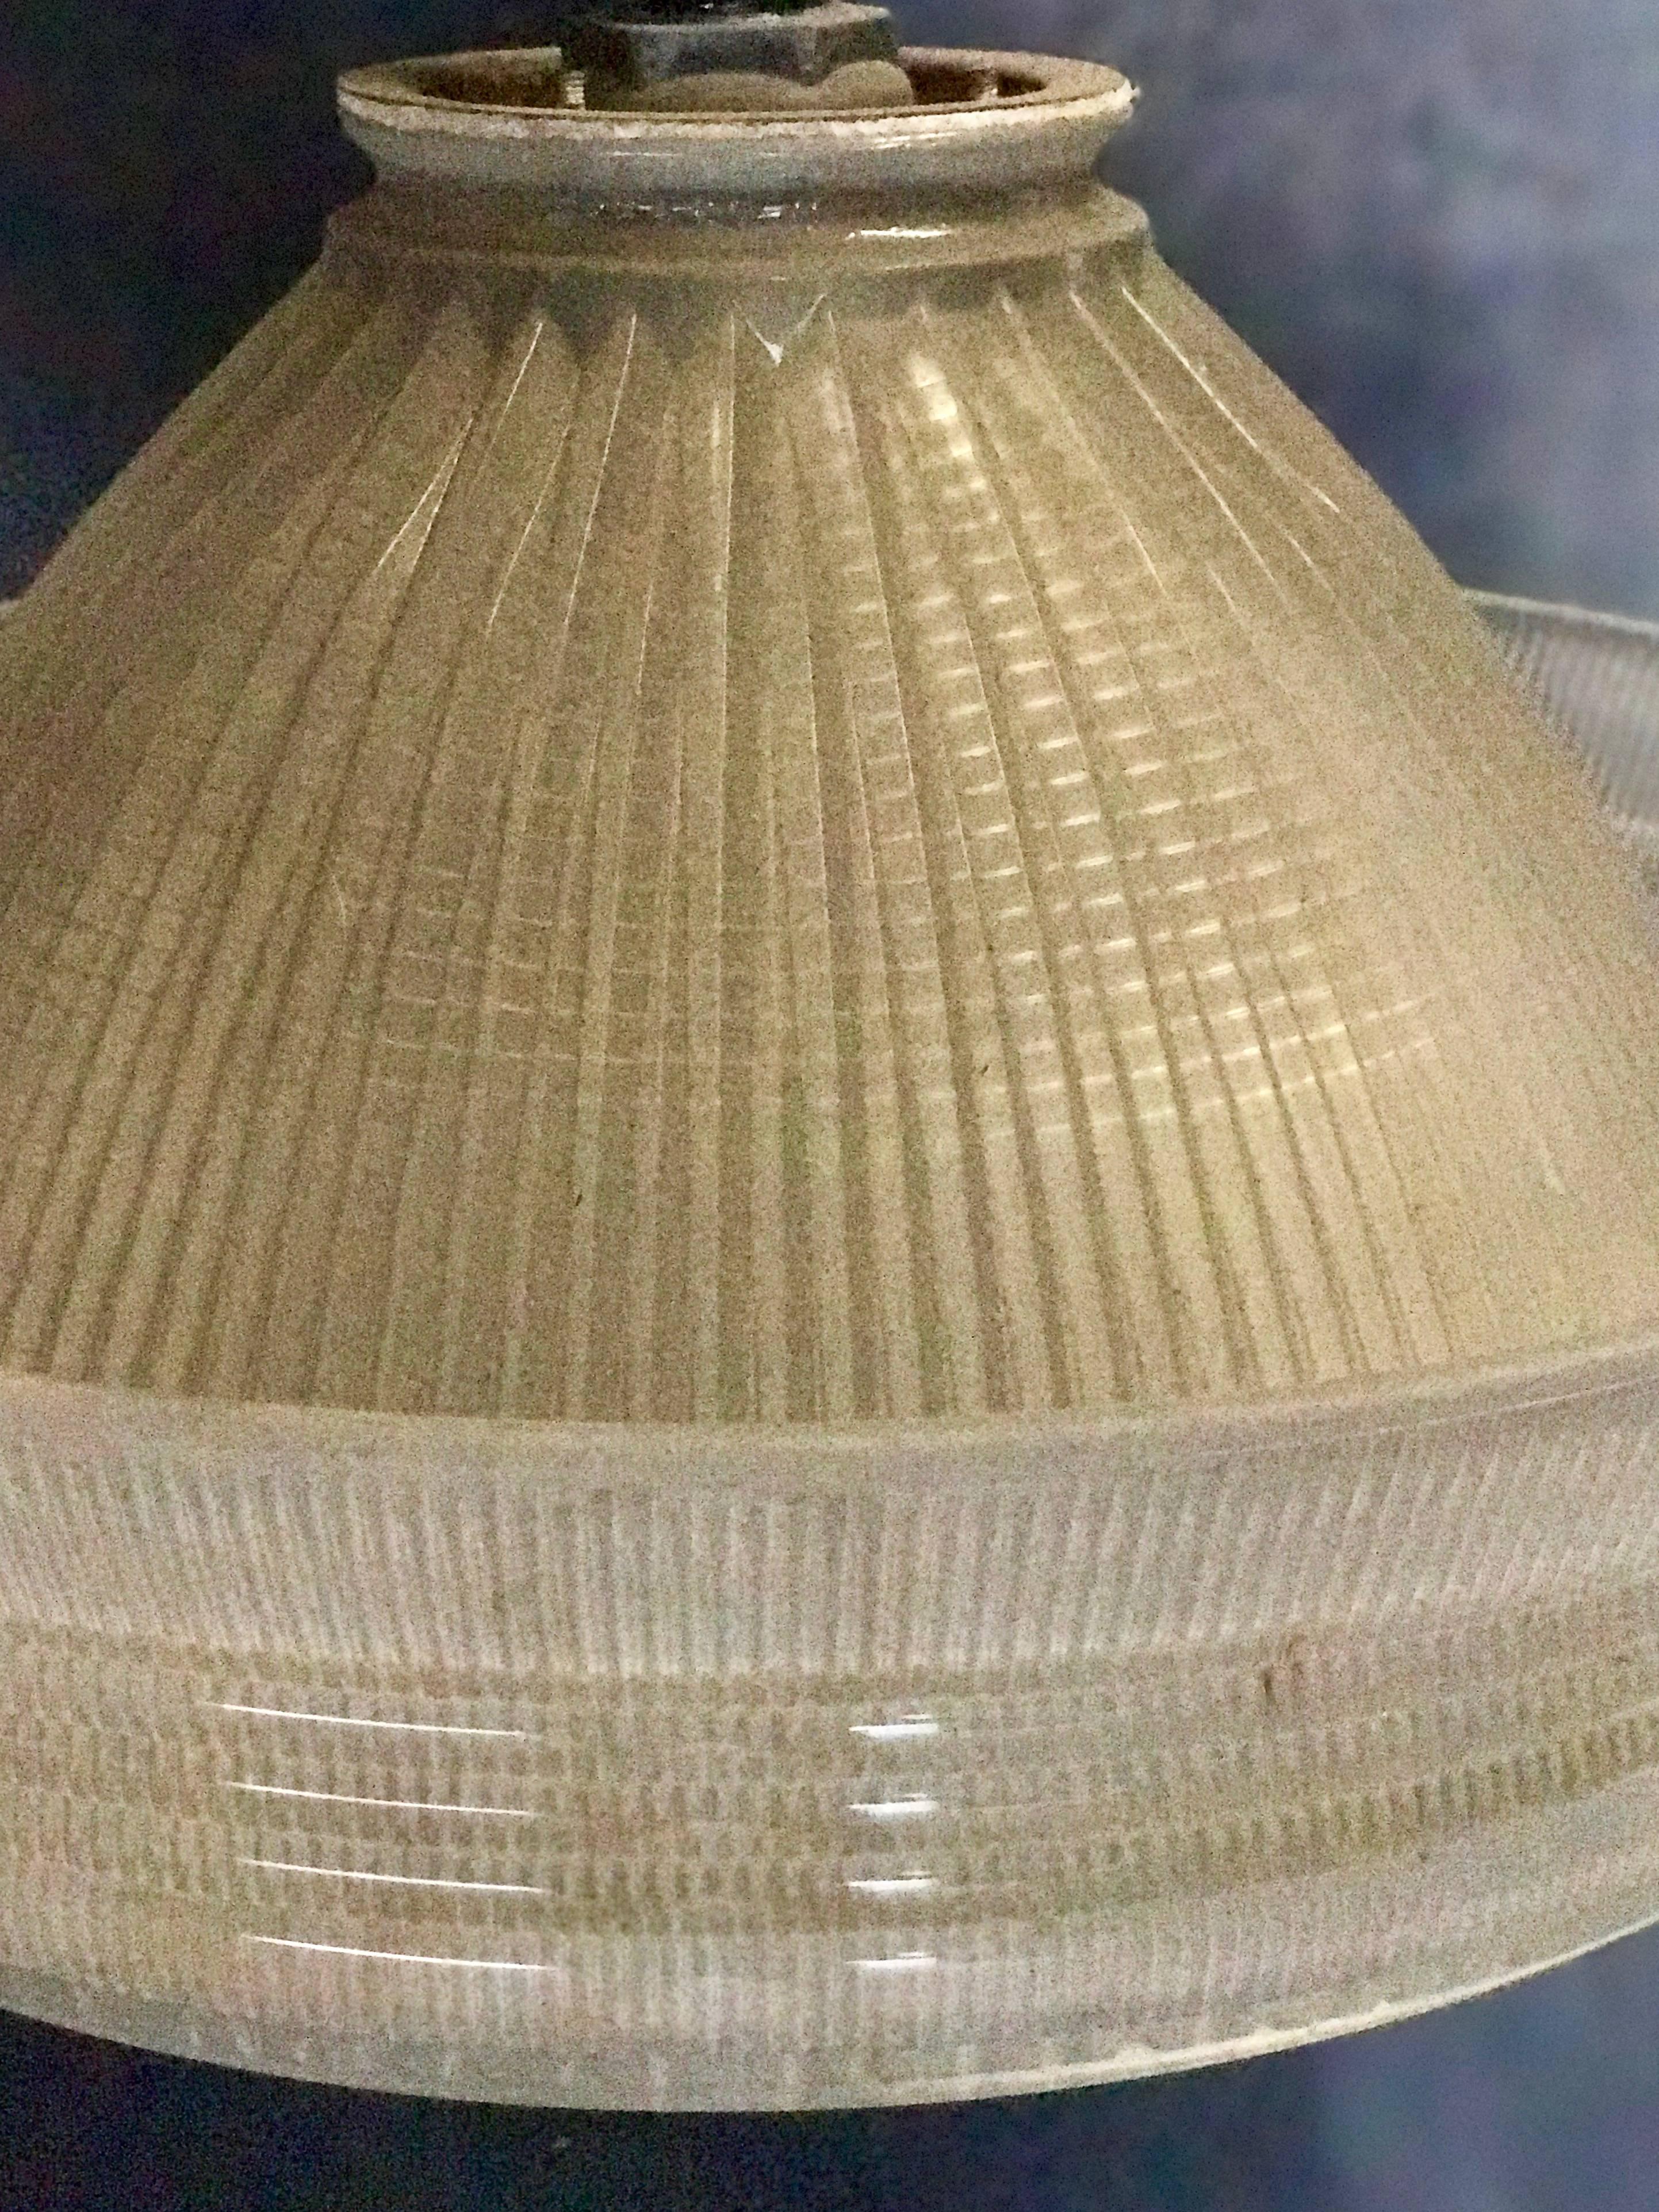 1940s pendant light